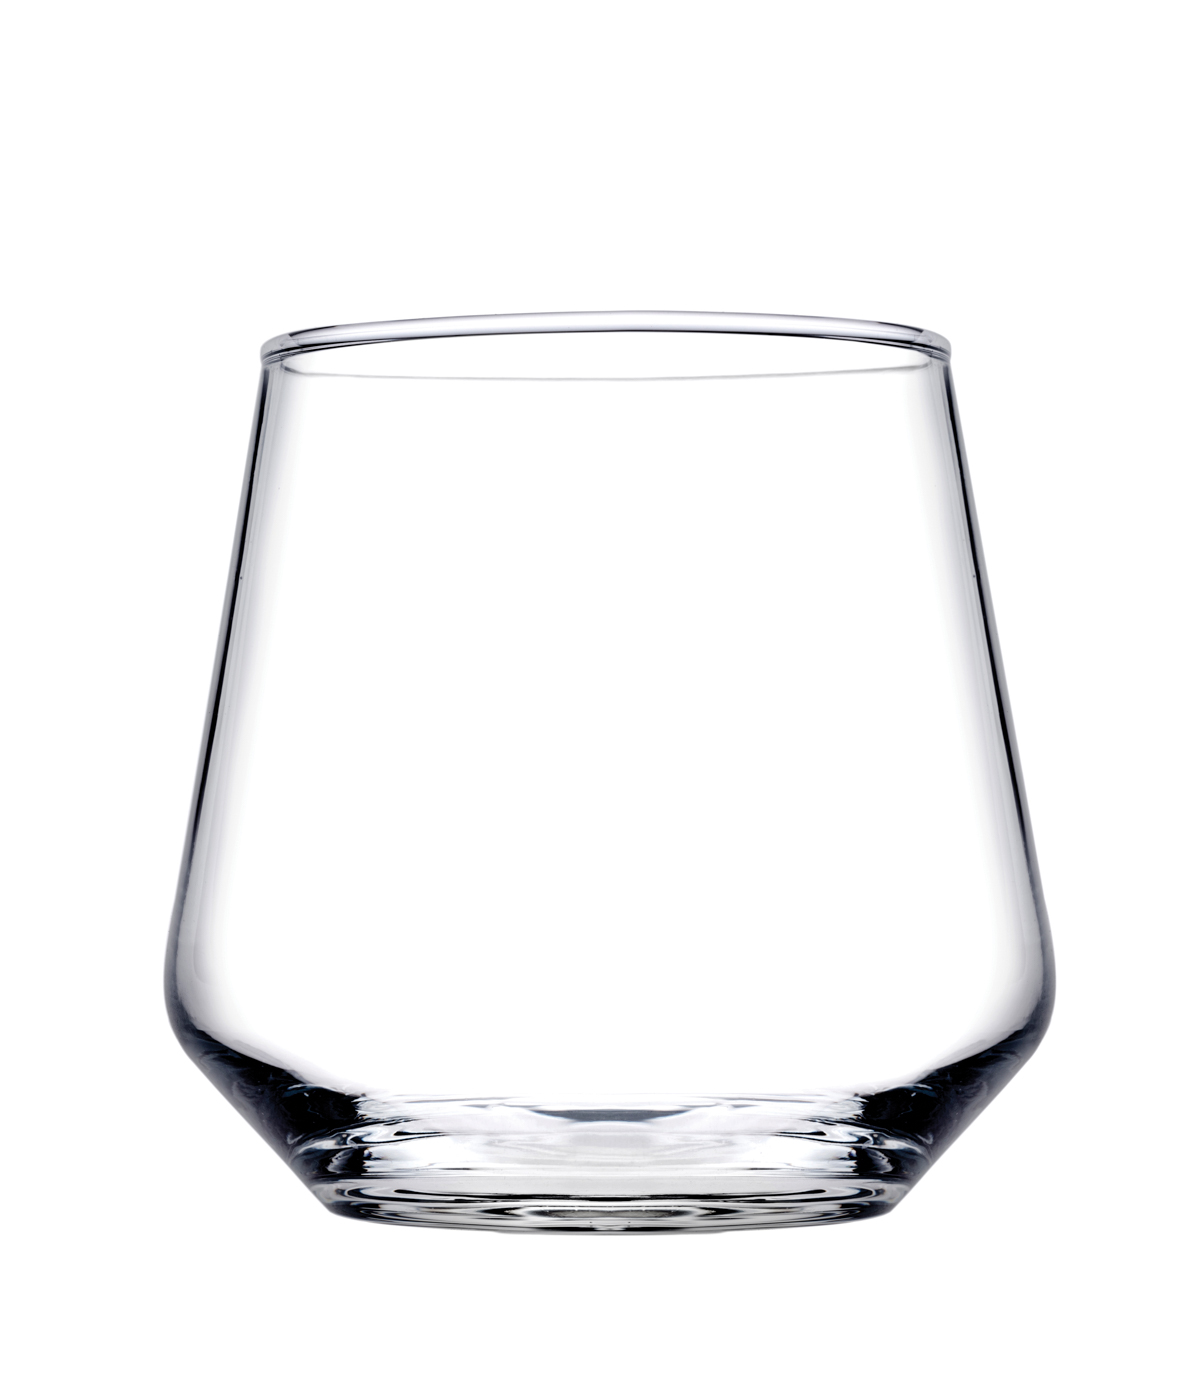 Whiskyglas Pasabahce Allegra, 0,345 ltr., Ø 5,6 cm, Set á 6 Stück, Glas